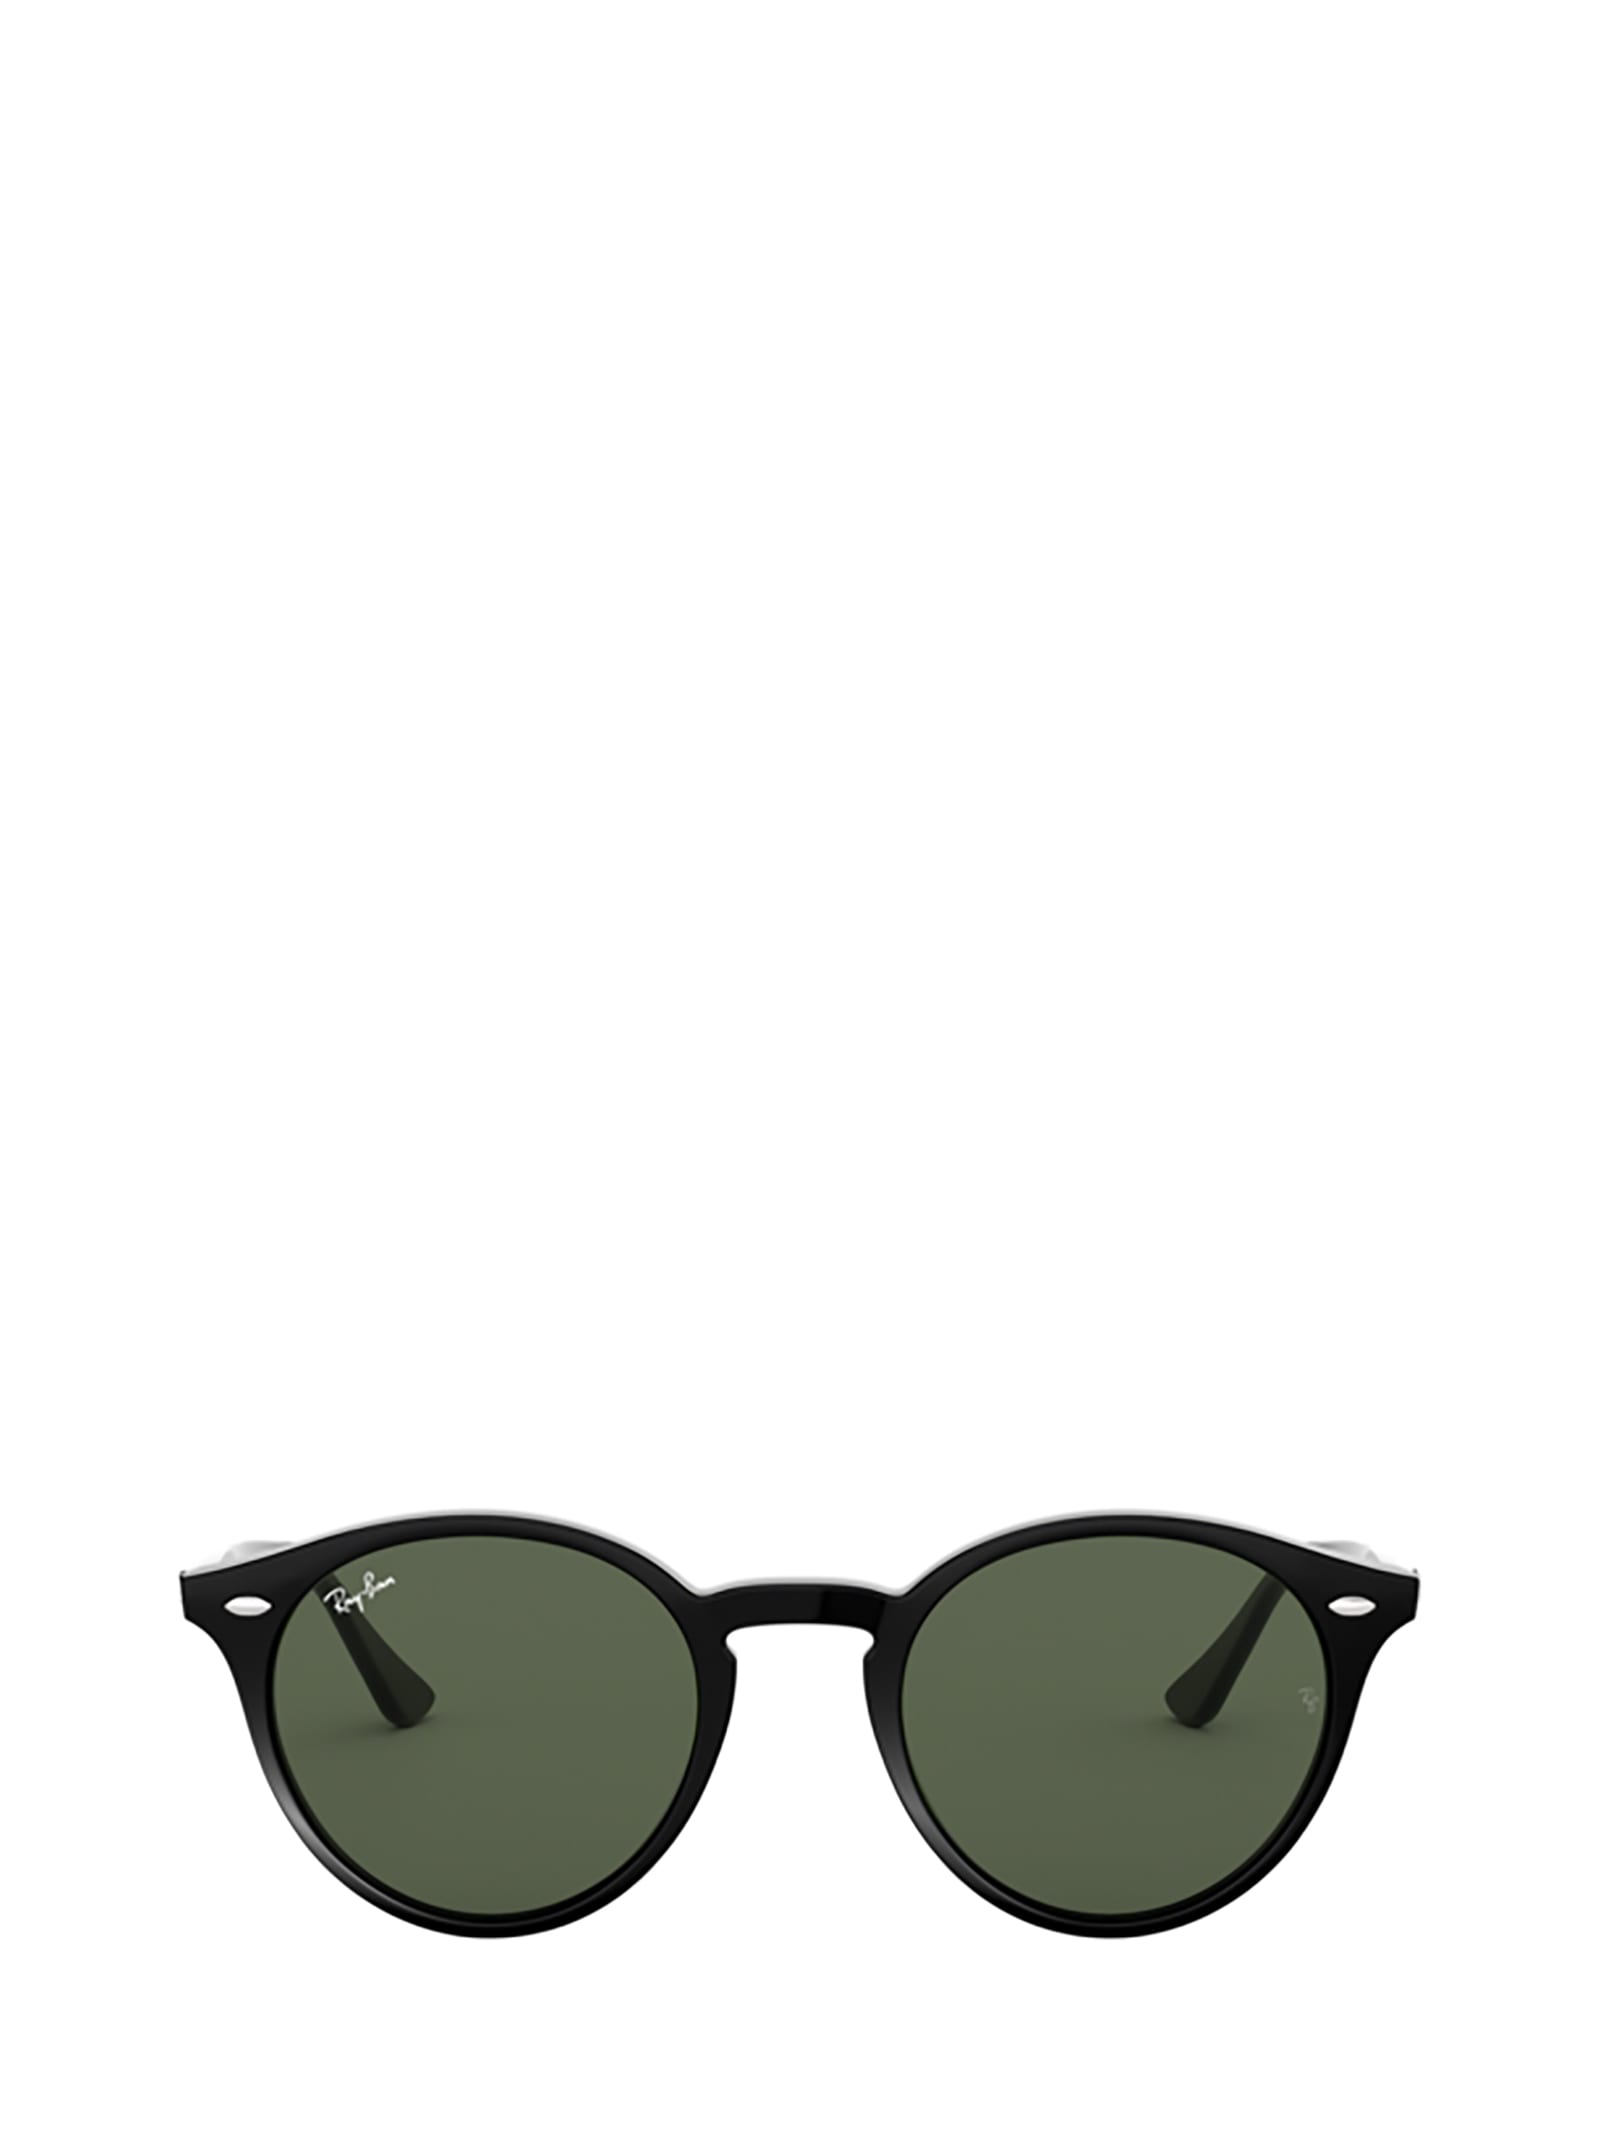 Ray Ban Rb2180 Black Sunglasses